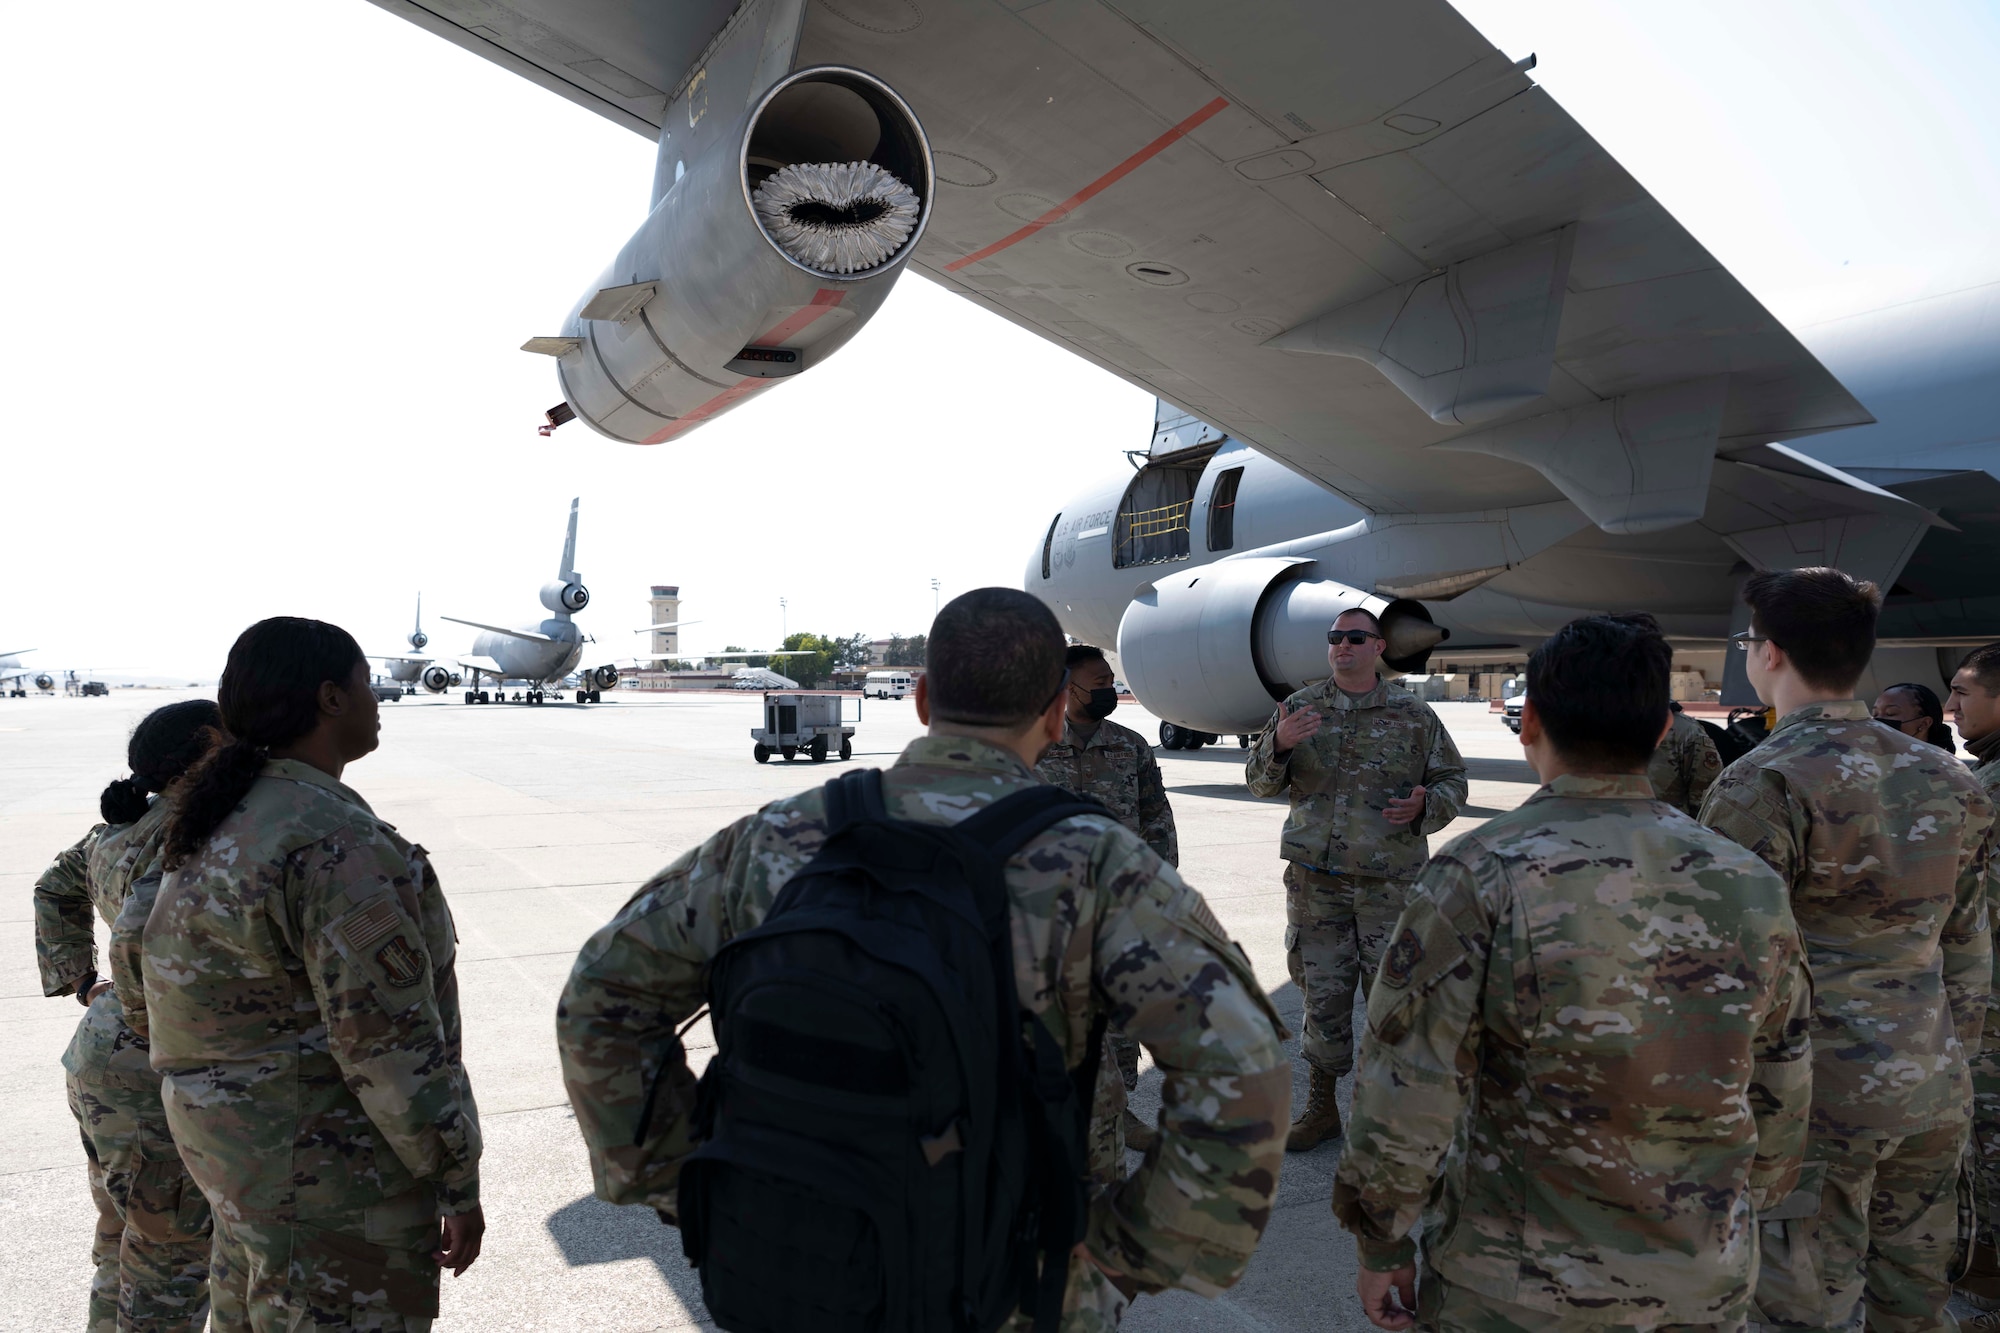 Airmen gather around a wing of an aircraft